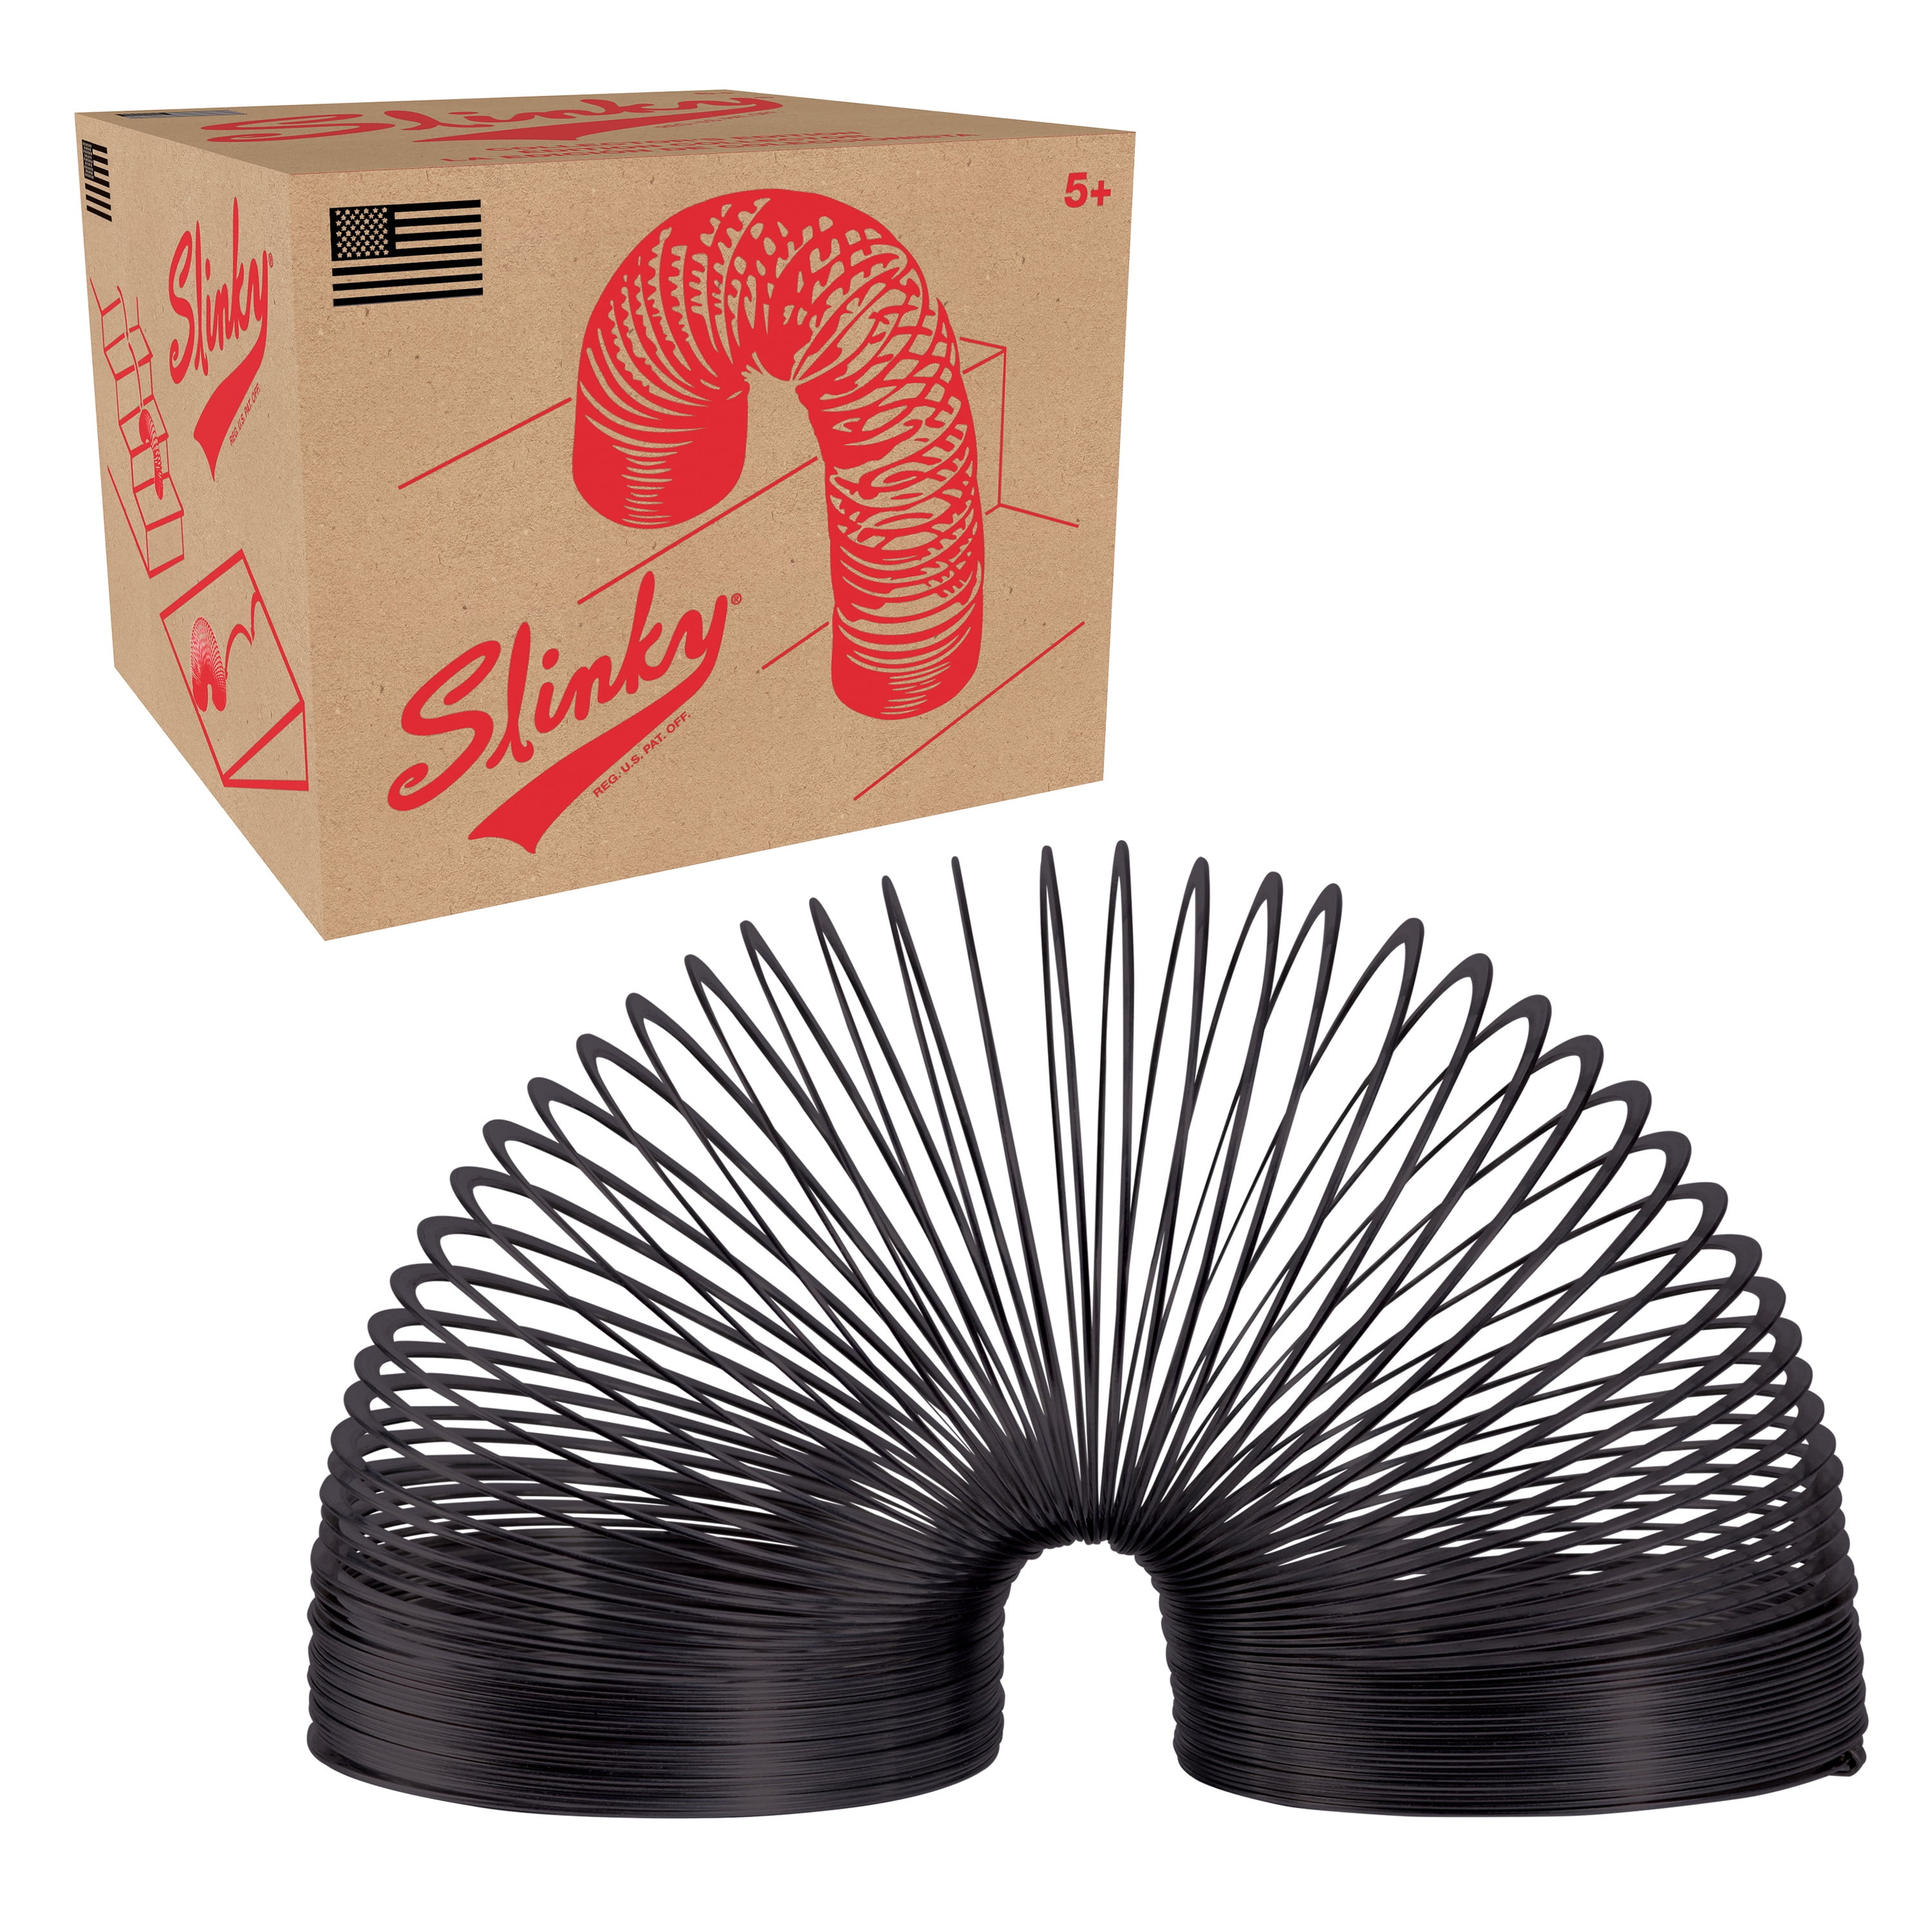 Details about   Original Slinky Junior Jr Metal Coil Spring Toy In Box 125TL Vintage Steel 